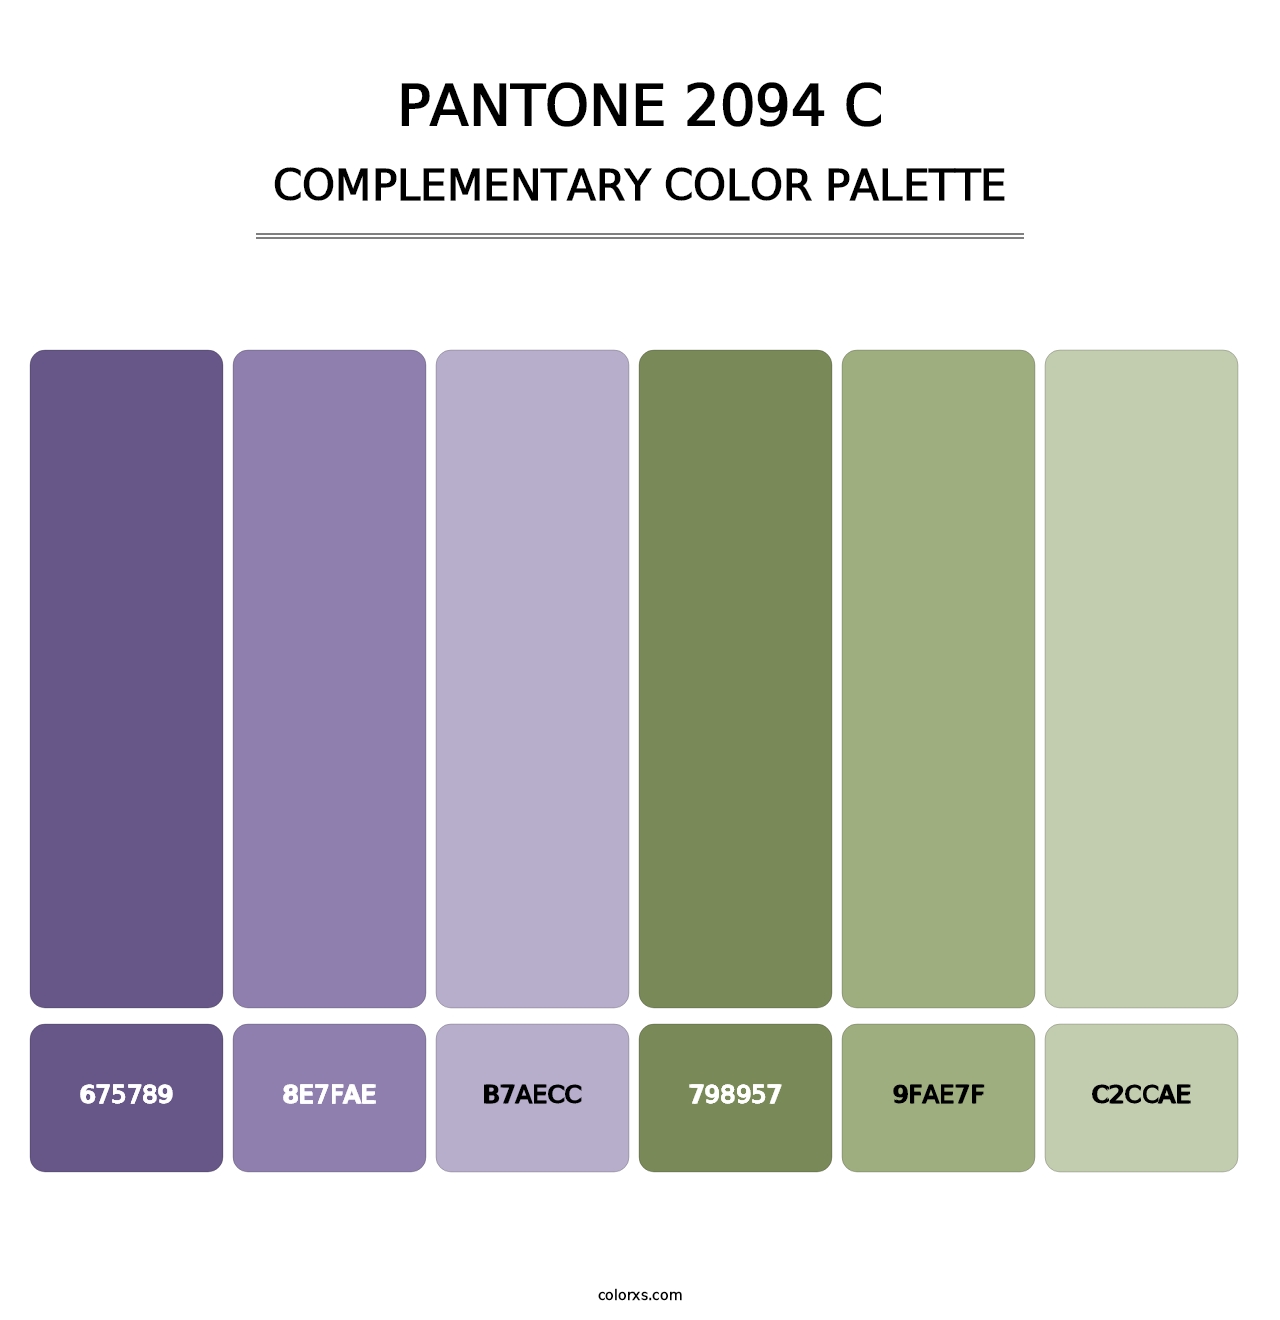 PANTONE 2094 C - Complementary Color Palette